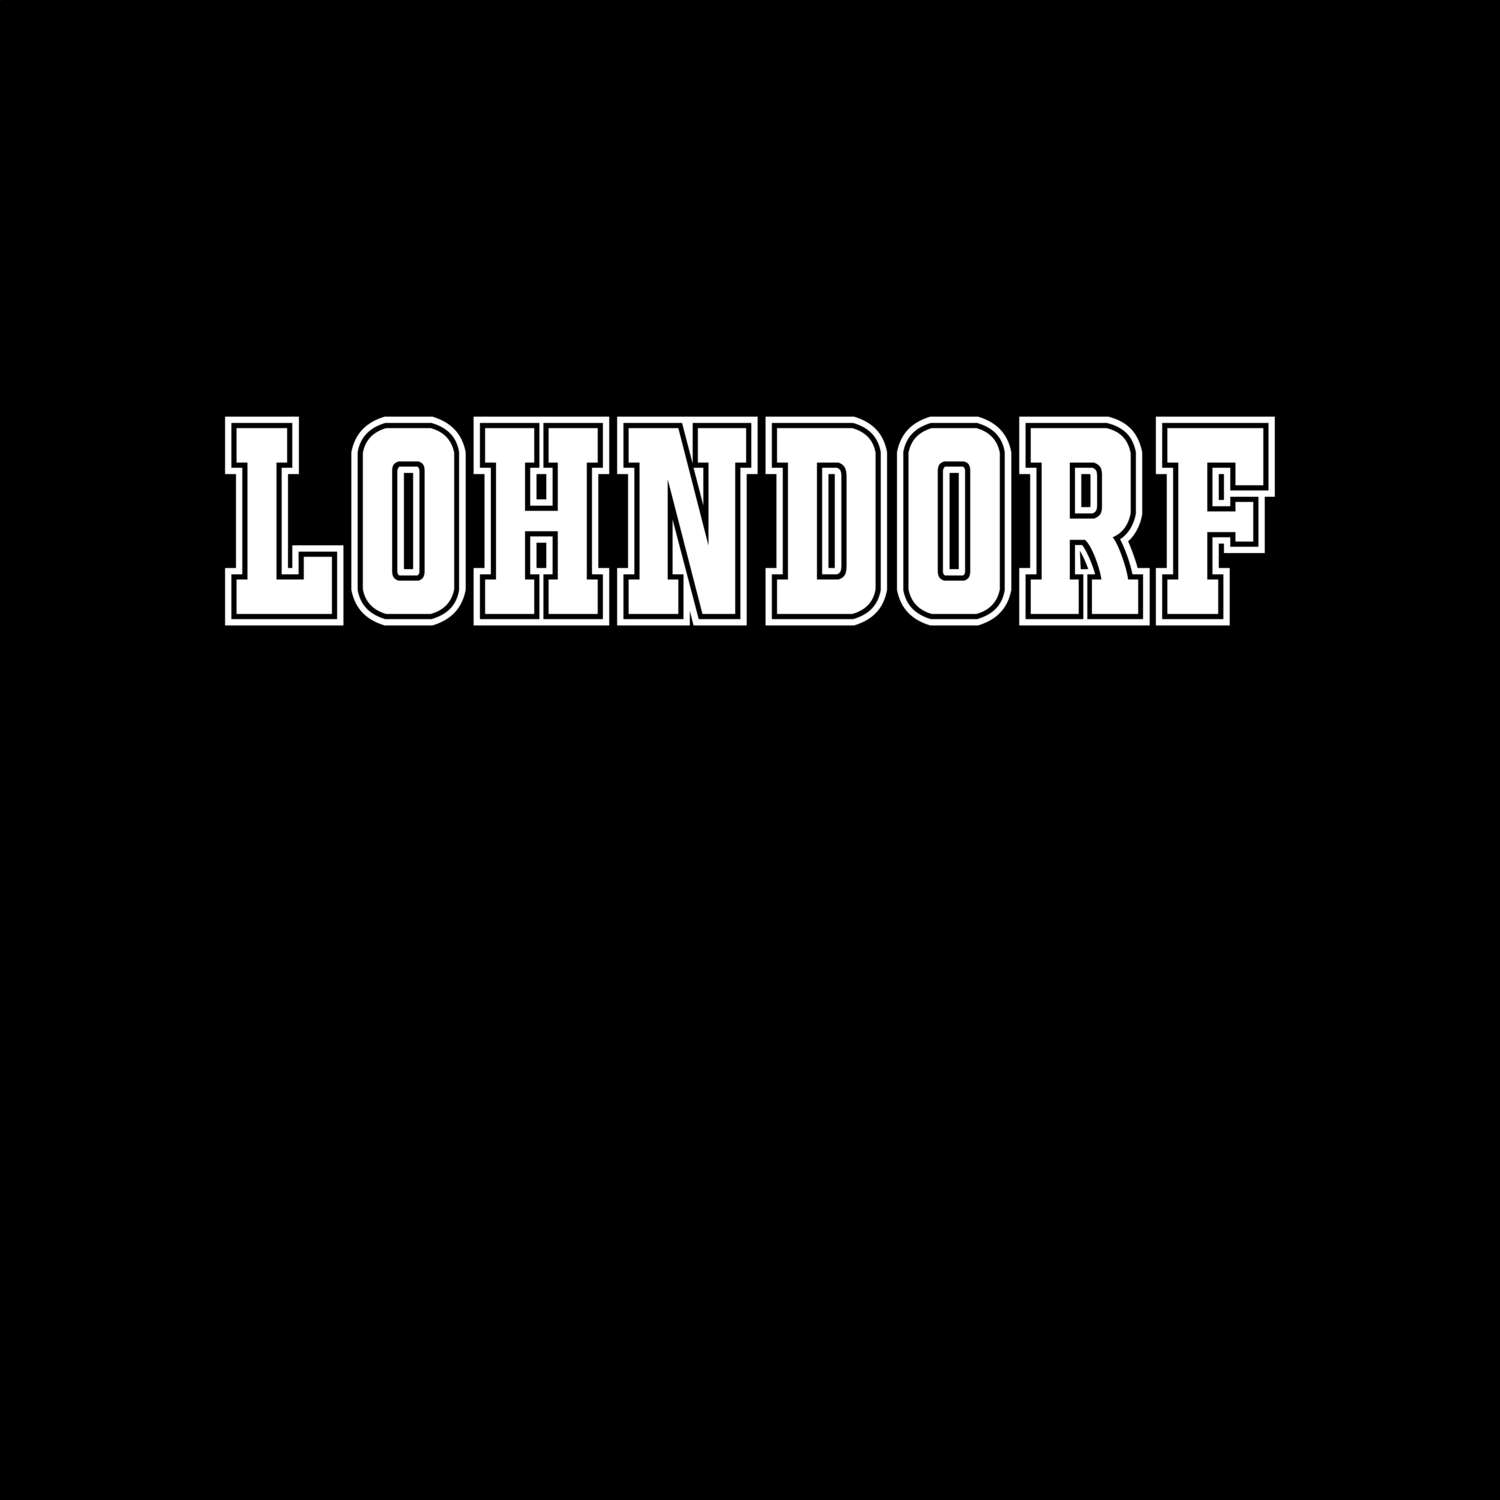 Lohndorf T-Shirt »Classic«